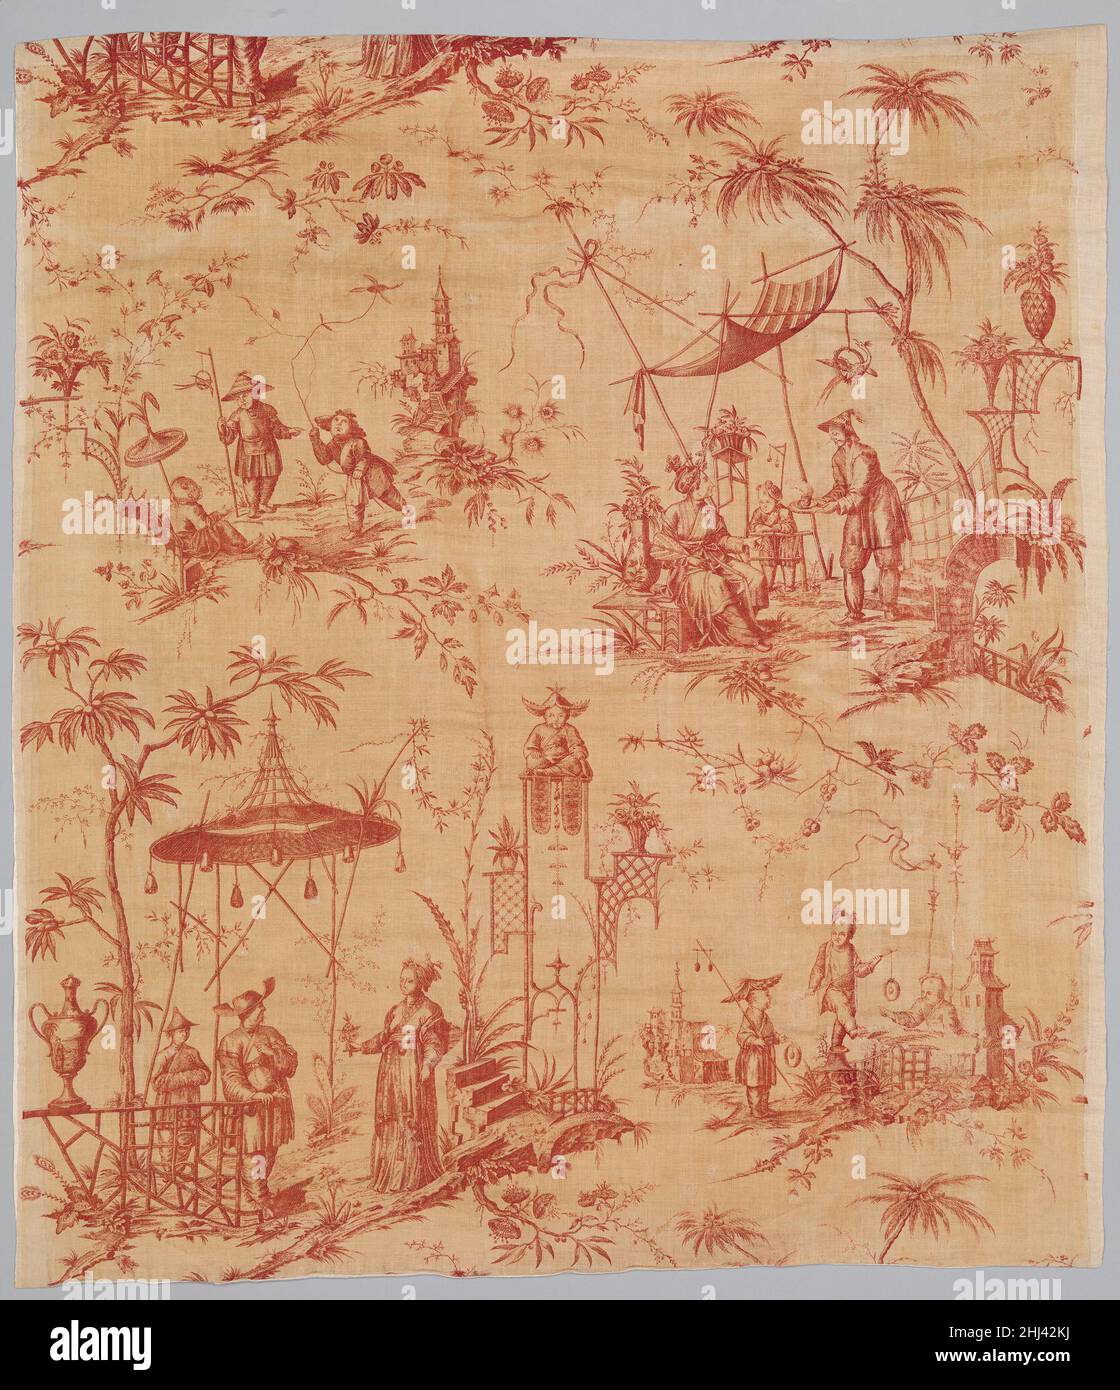 Stampa pittorica 18th secolo forse Oberkampf Manufactory francese. Stampa grafica 221947 Foto Stock